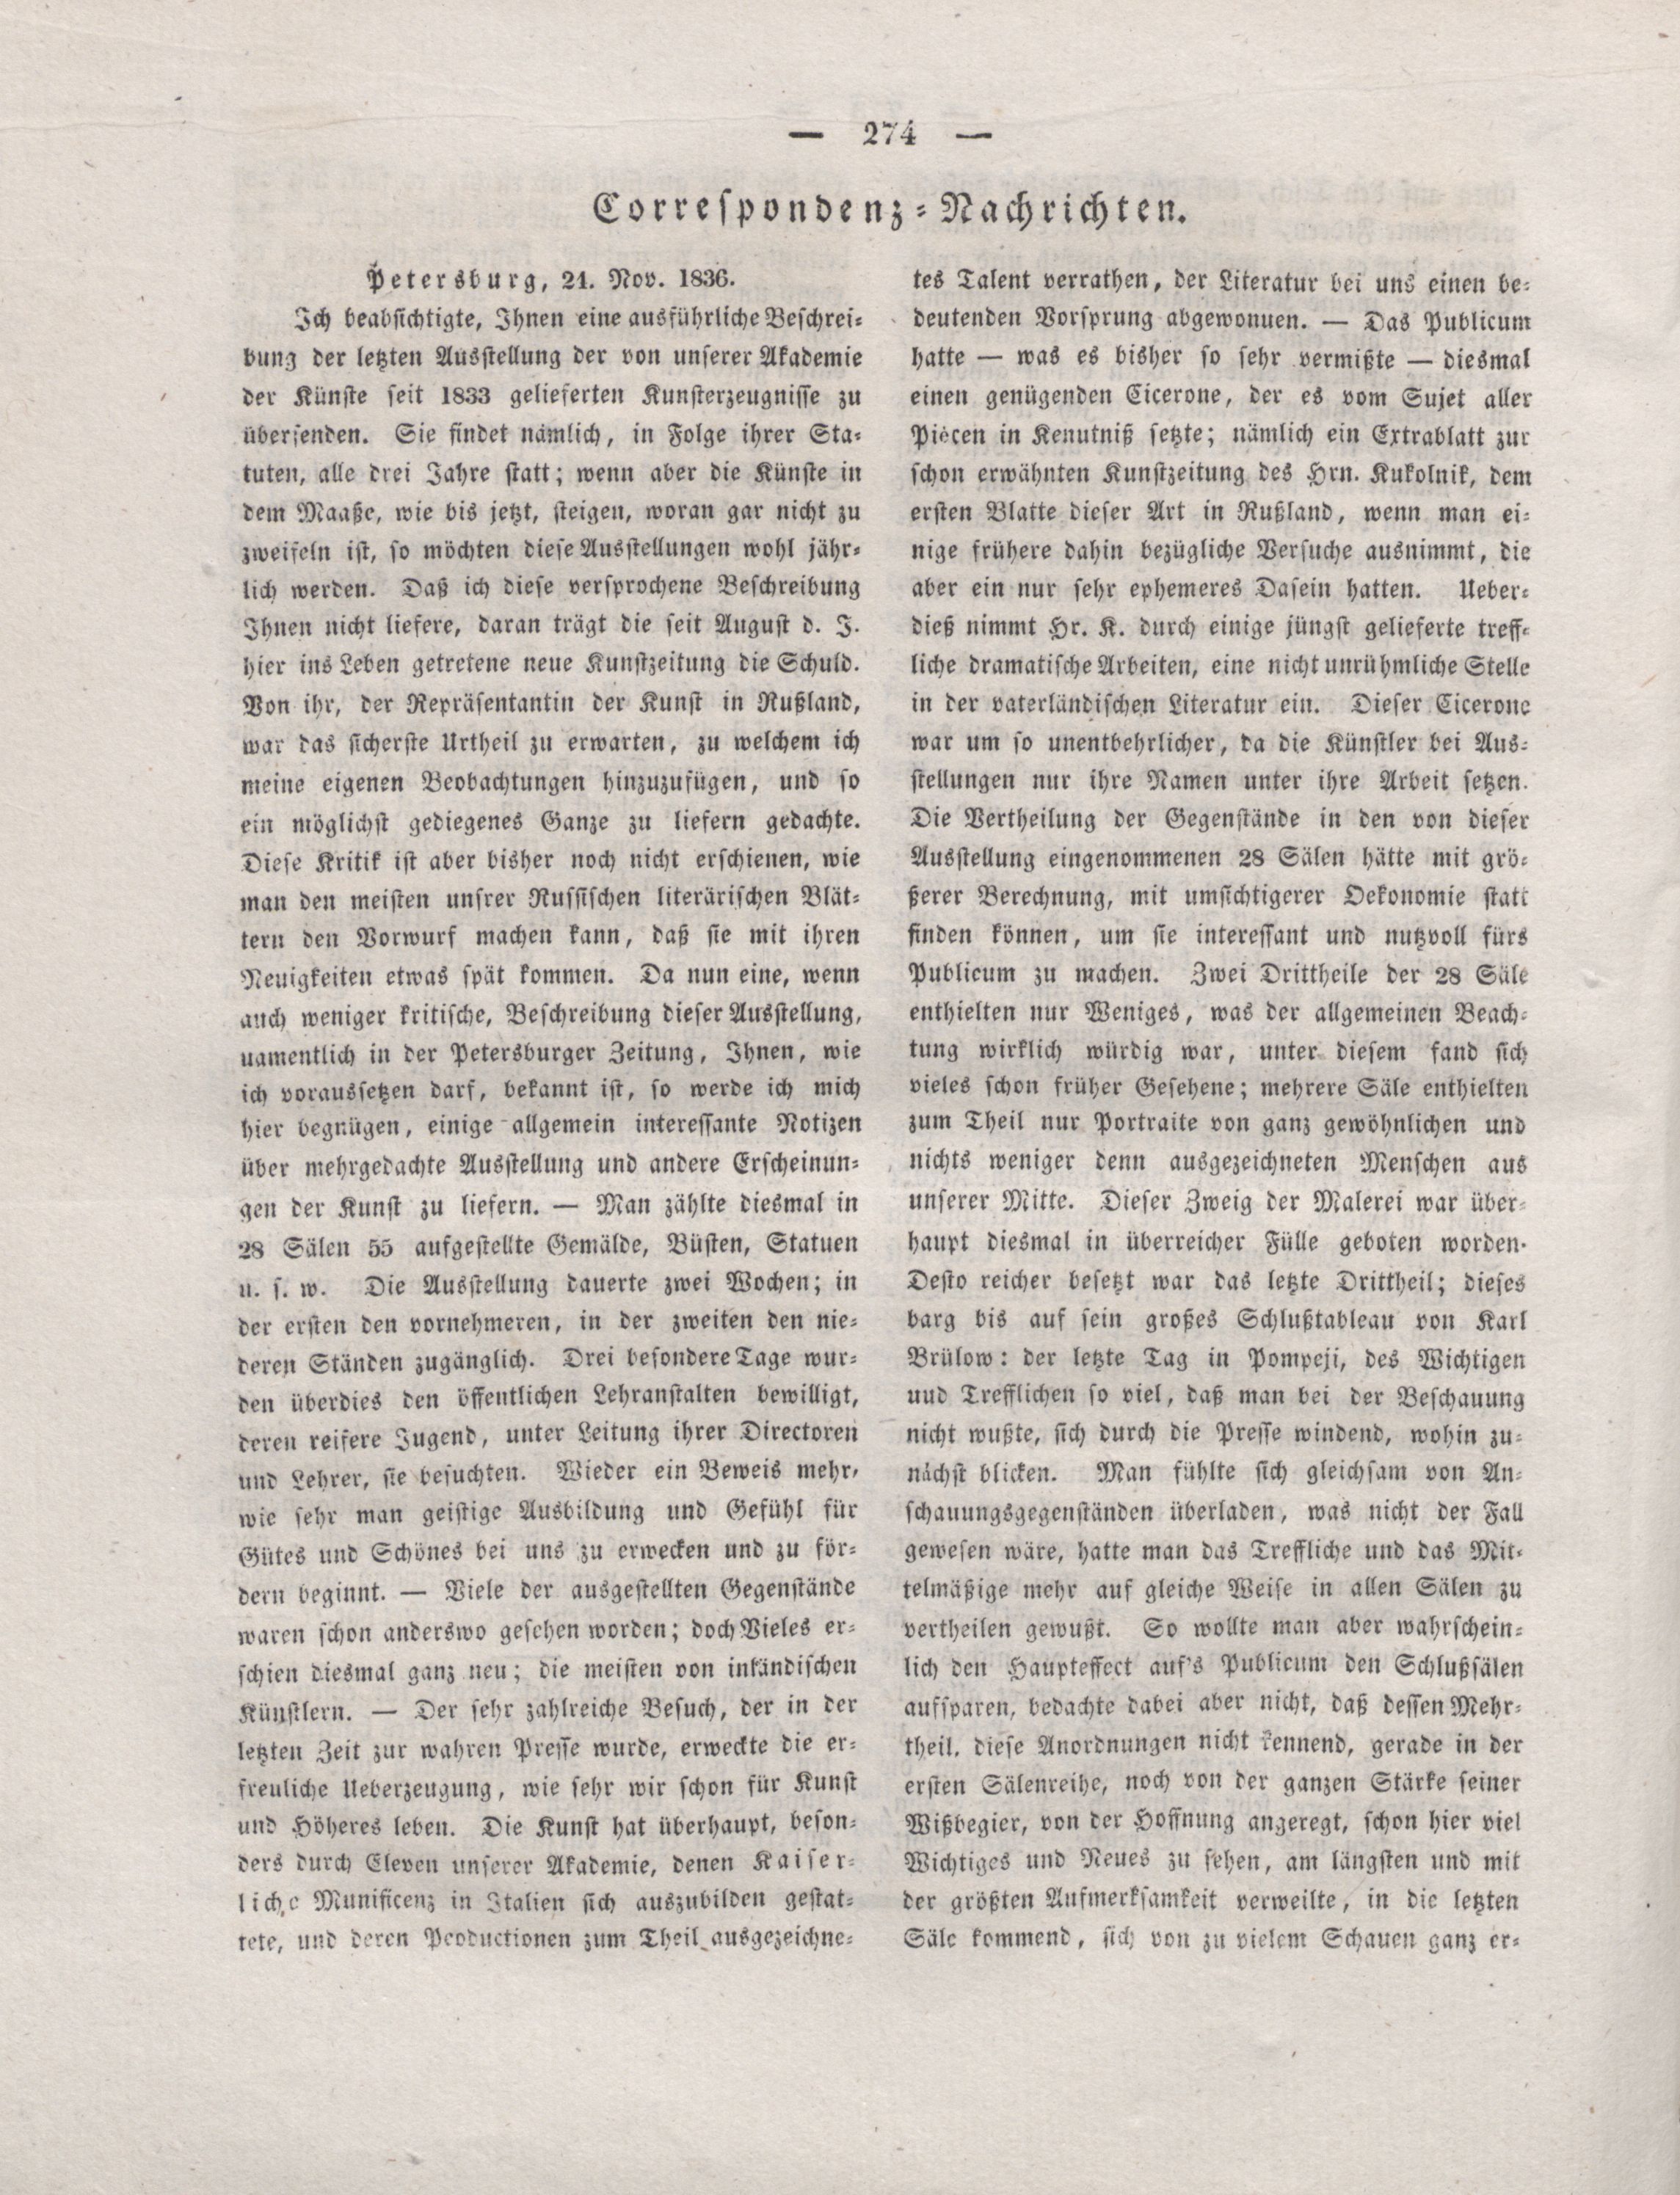 Der Refraktor [1836] (1836) | 275. (274) Põhitekst